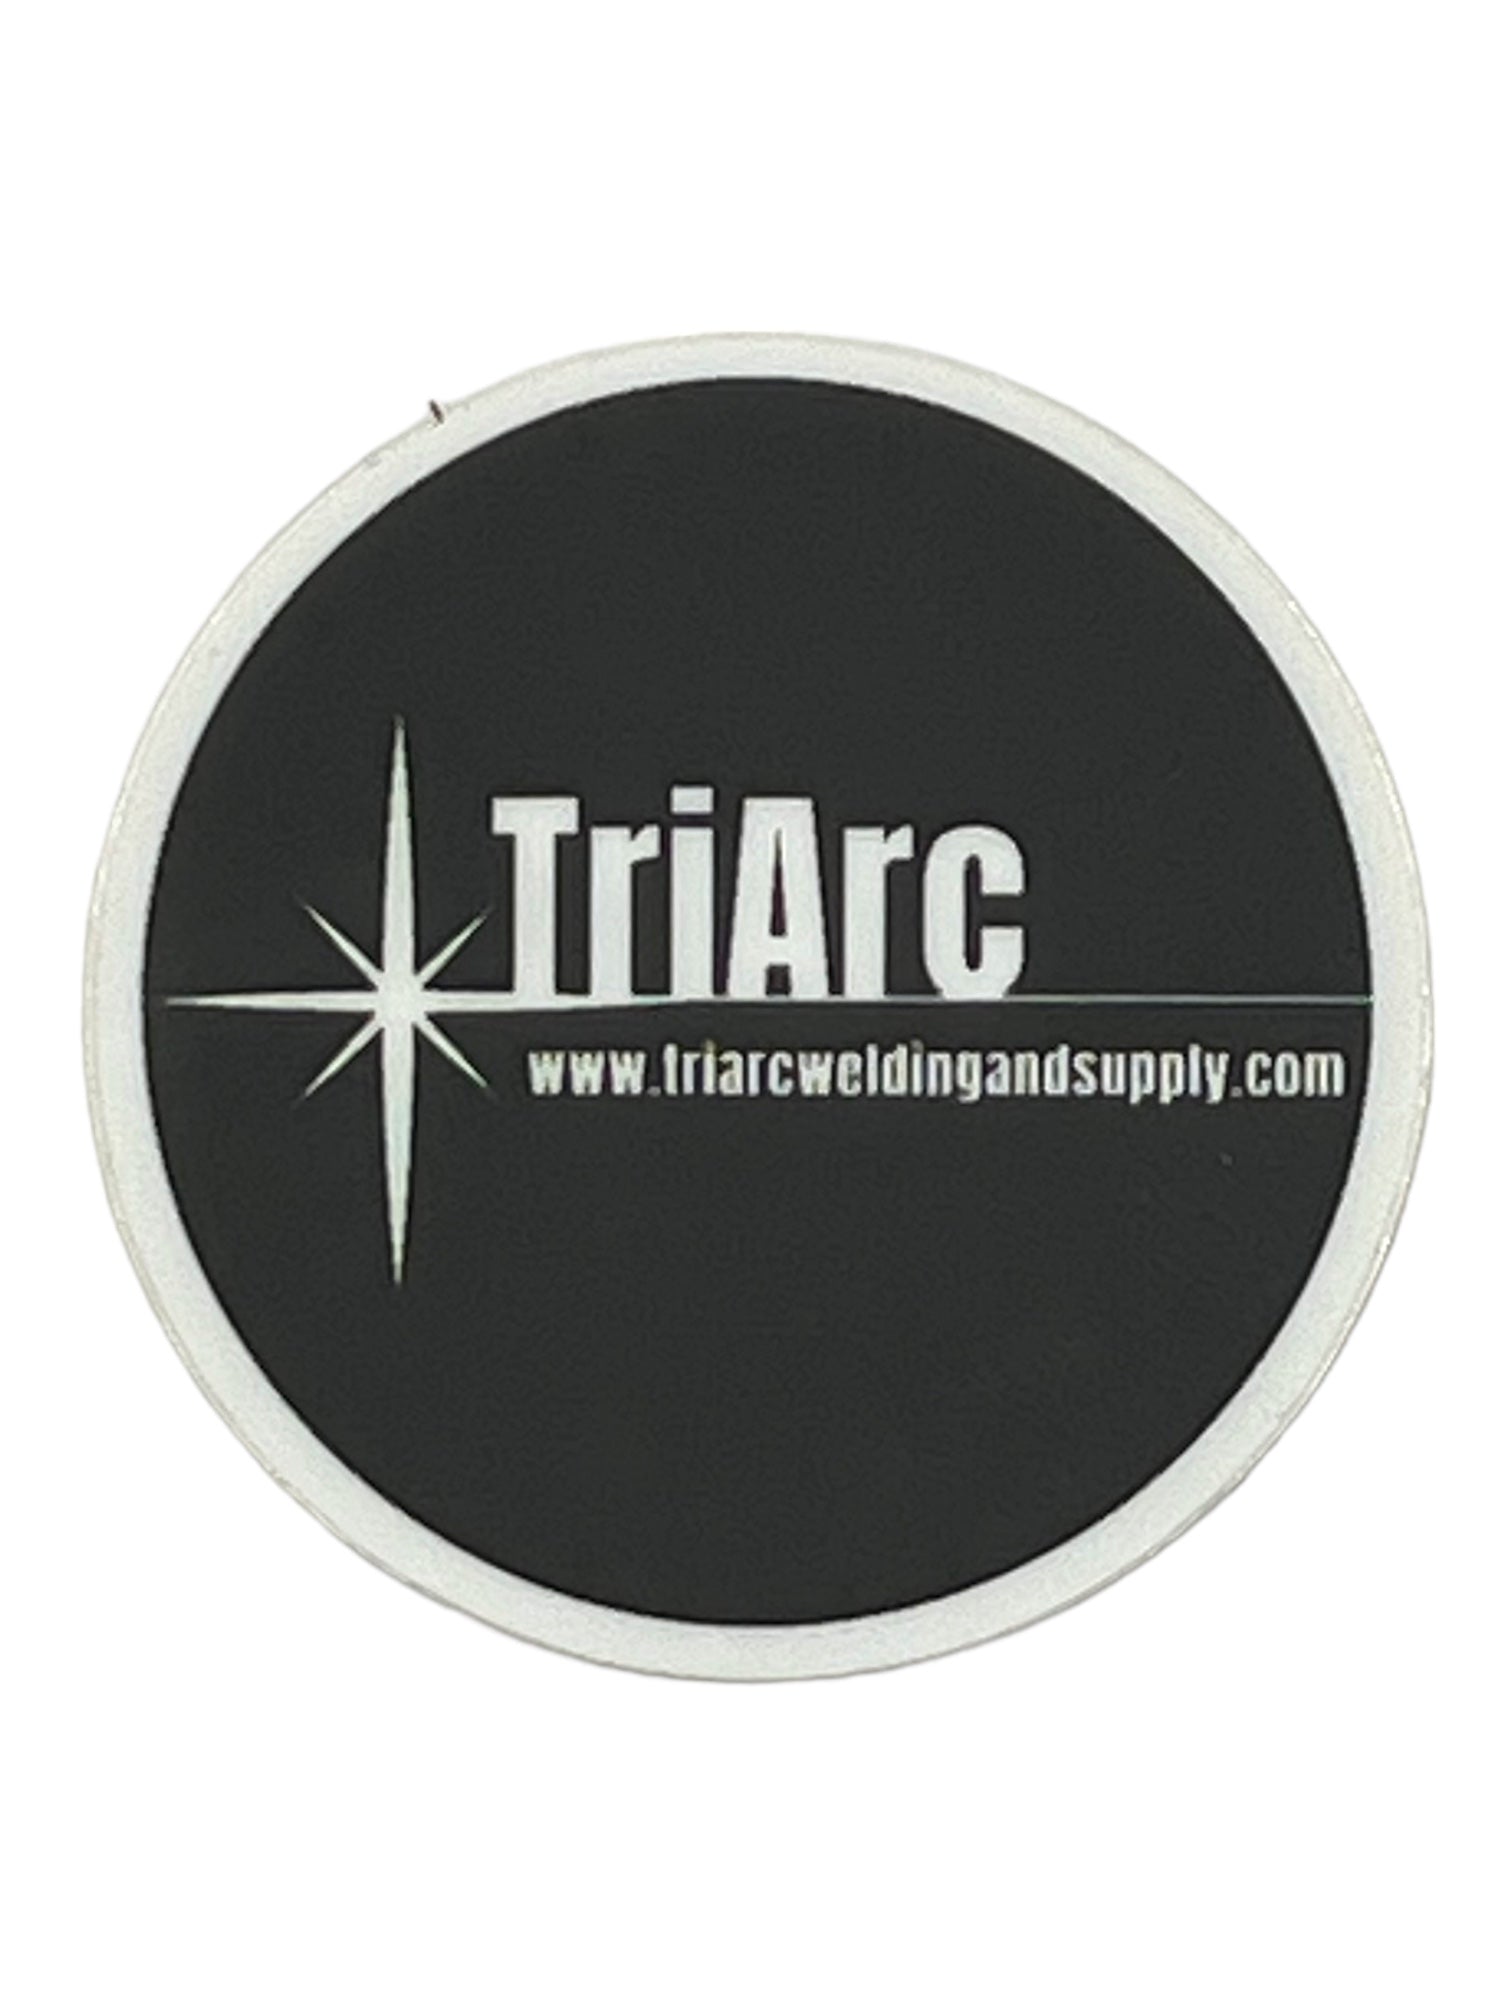 TriArc Sticker - TriArc Welding And Supply